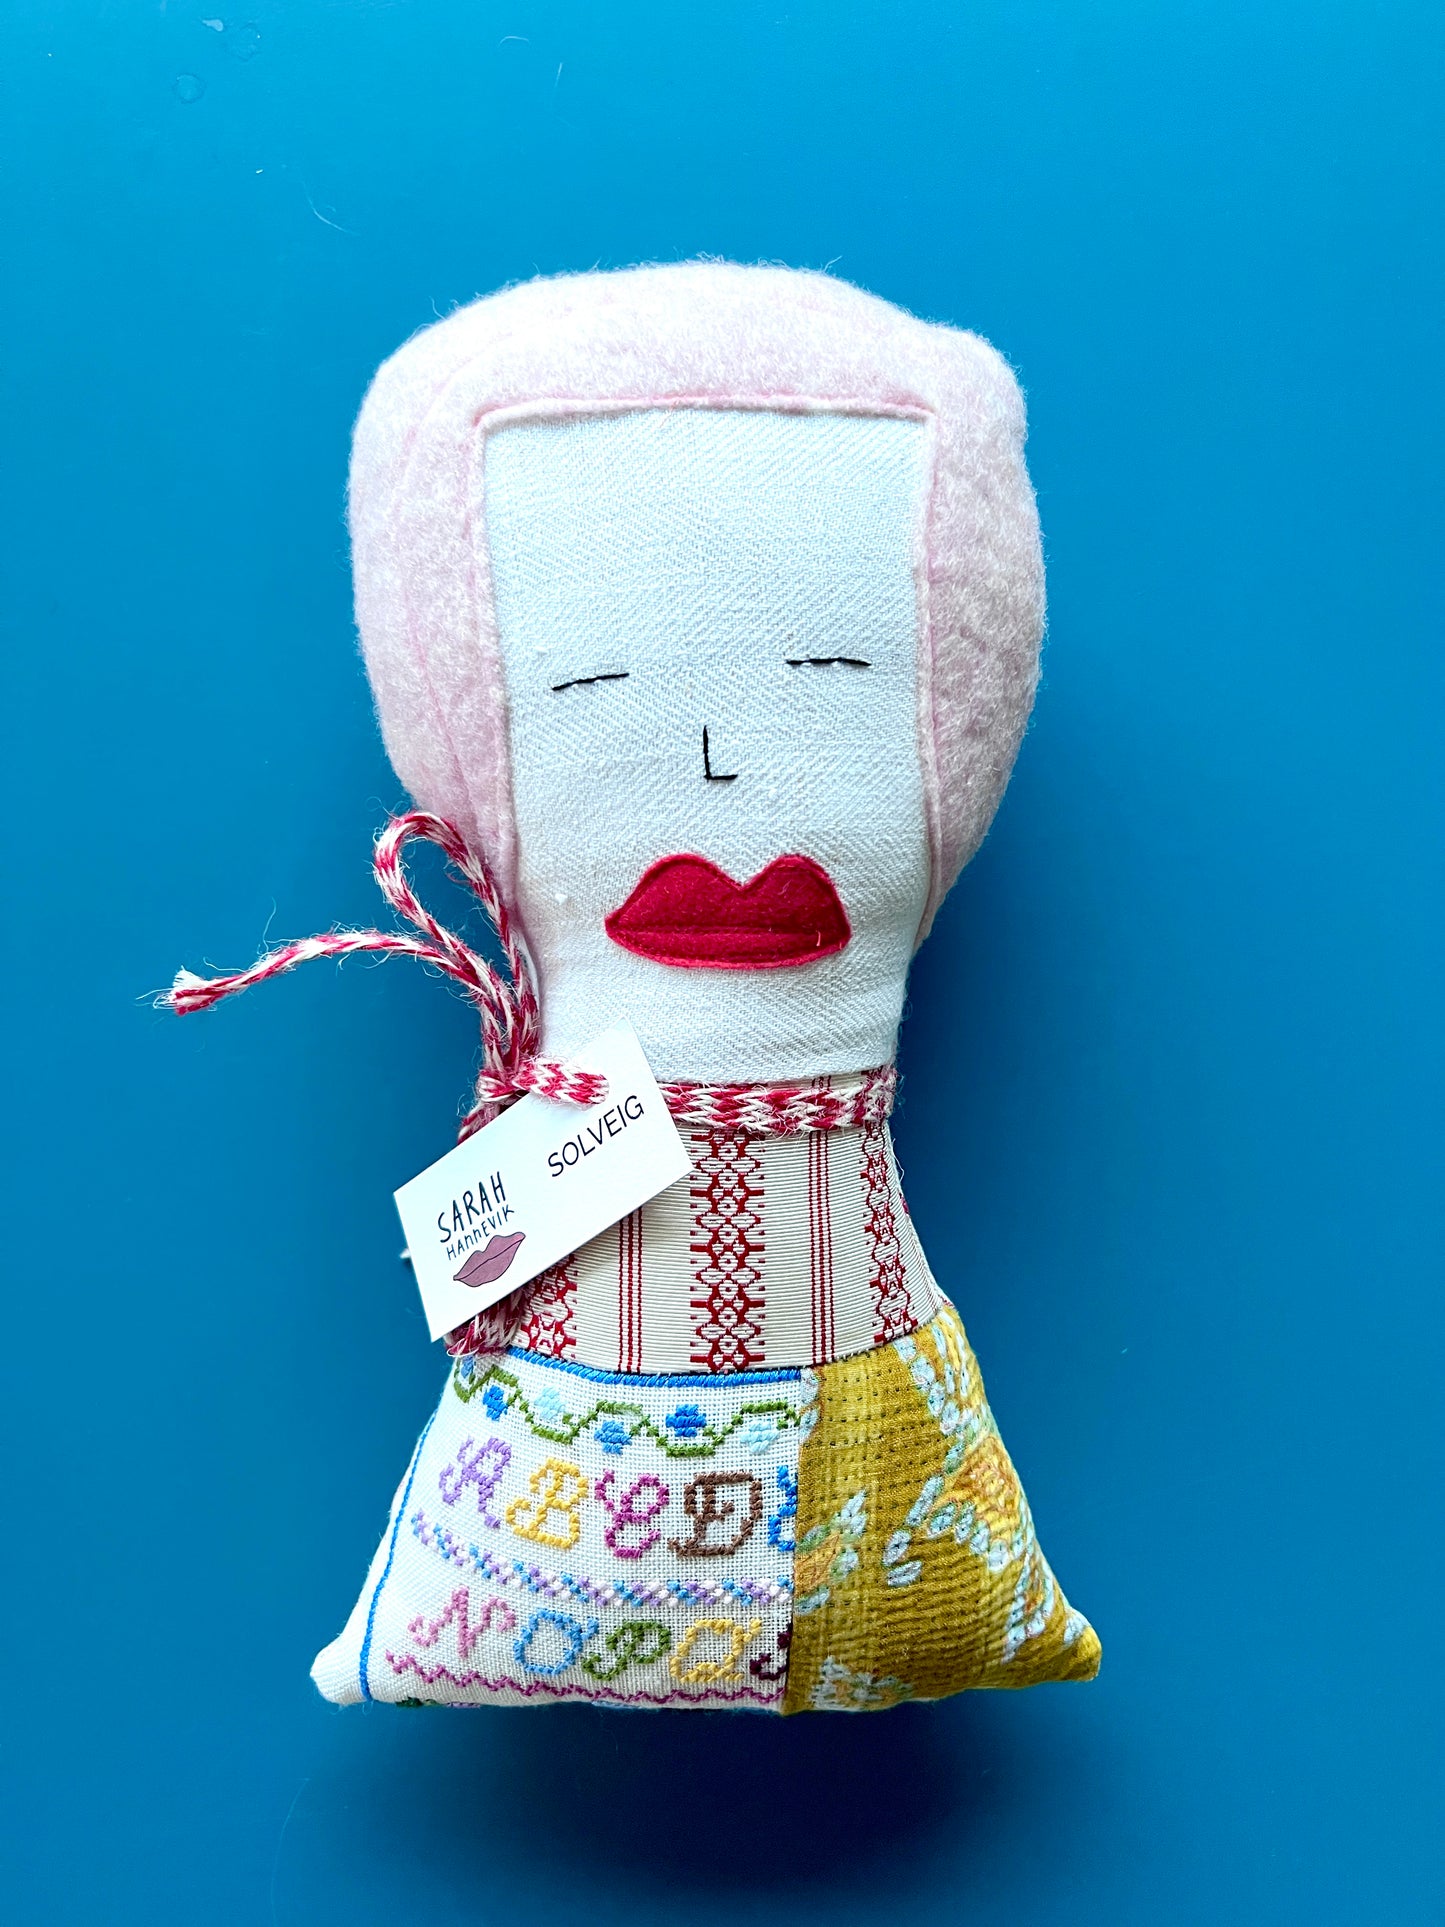 Handmade doll “Solveig”